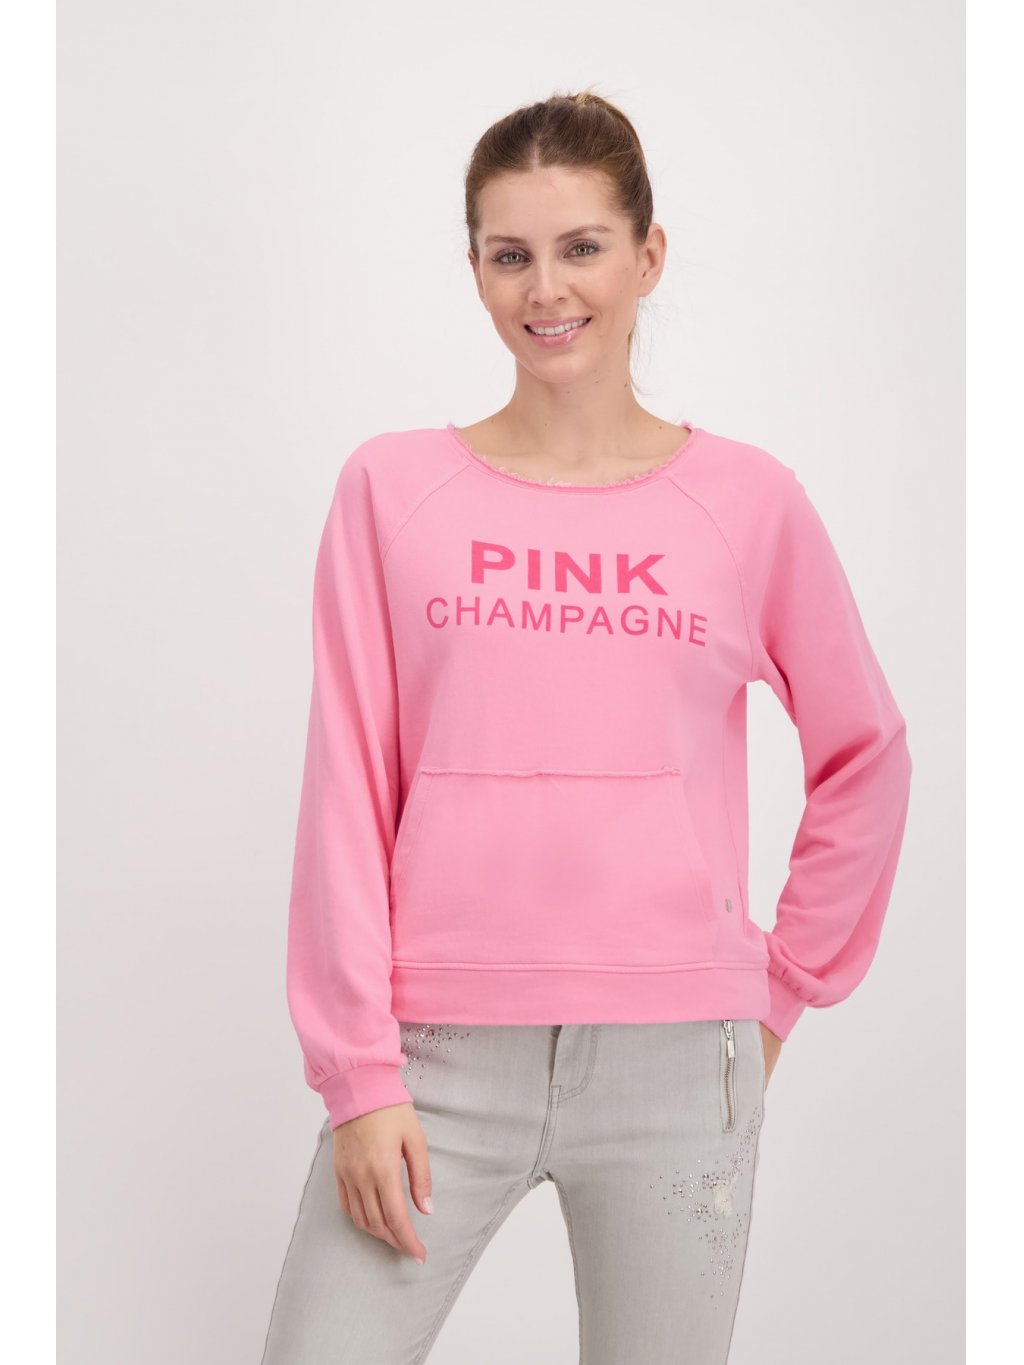 Mikina Monari 6658 růžová pink champagne